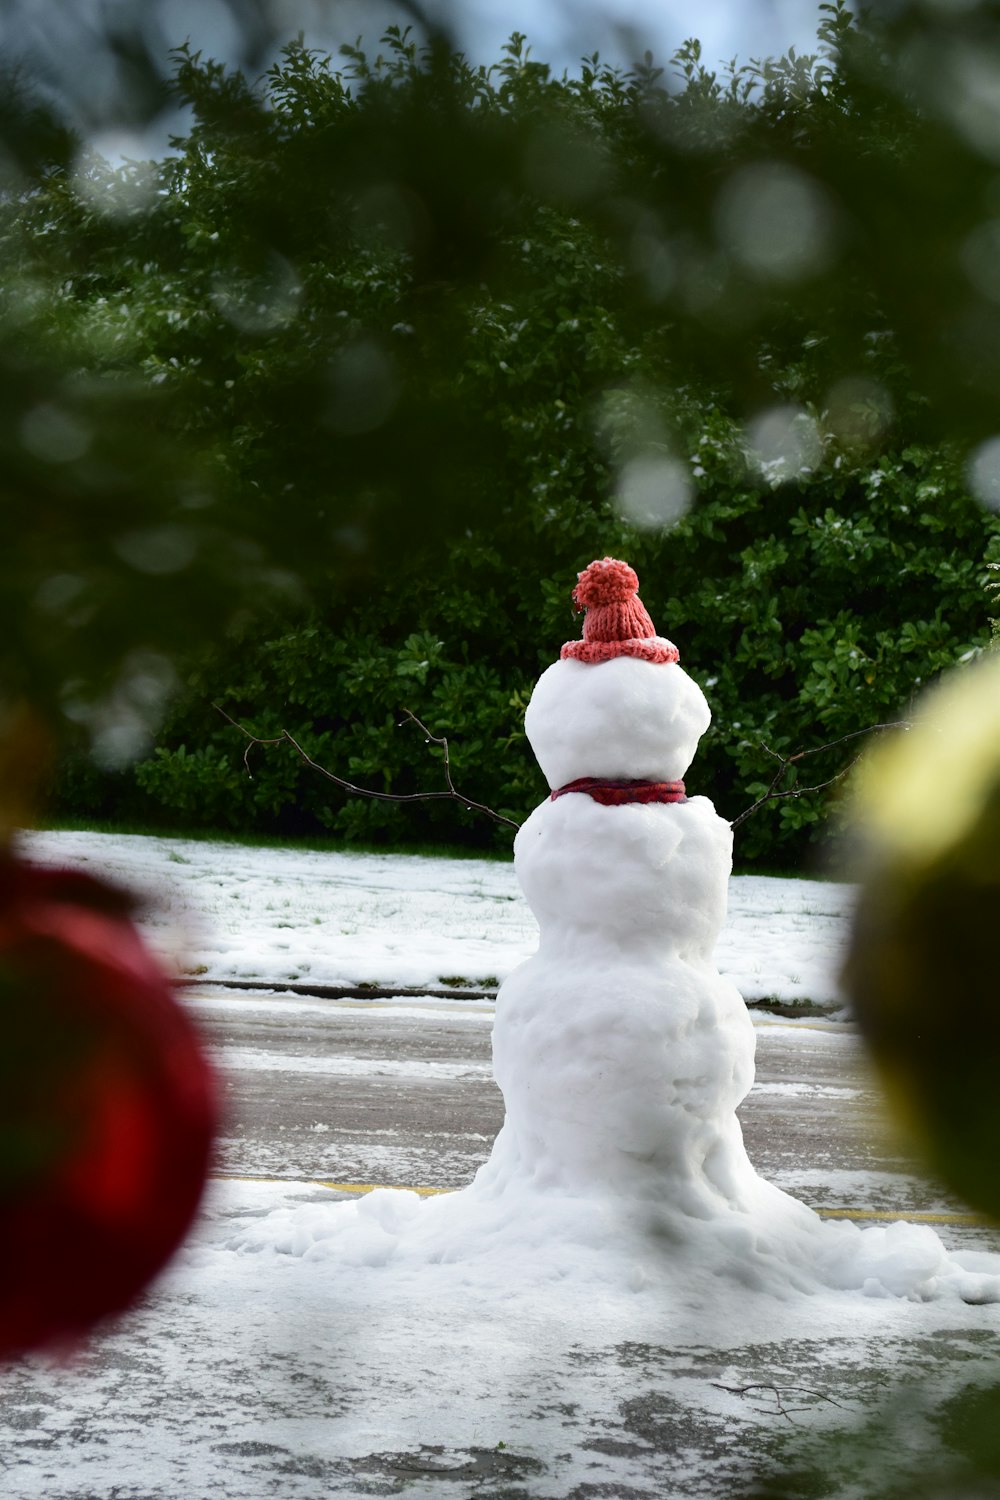 snowman figurine on snow covered ground